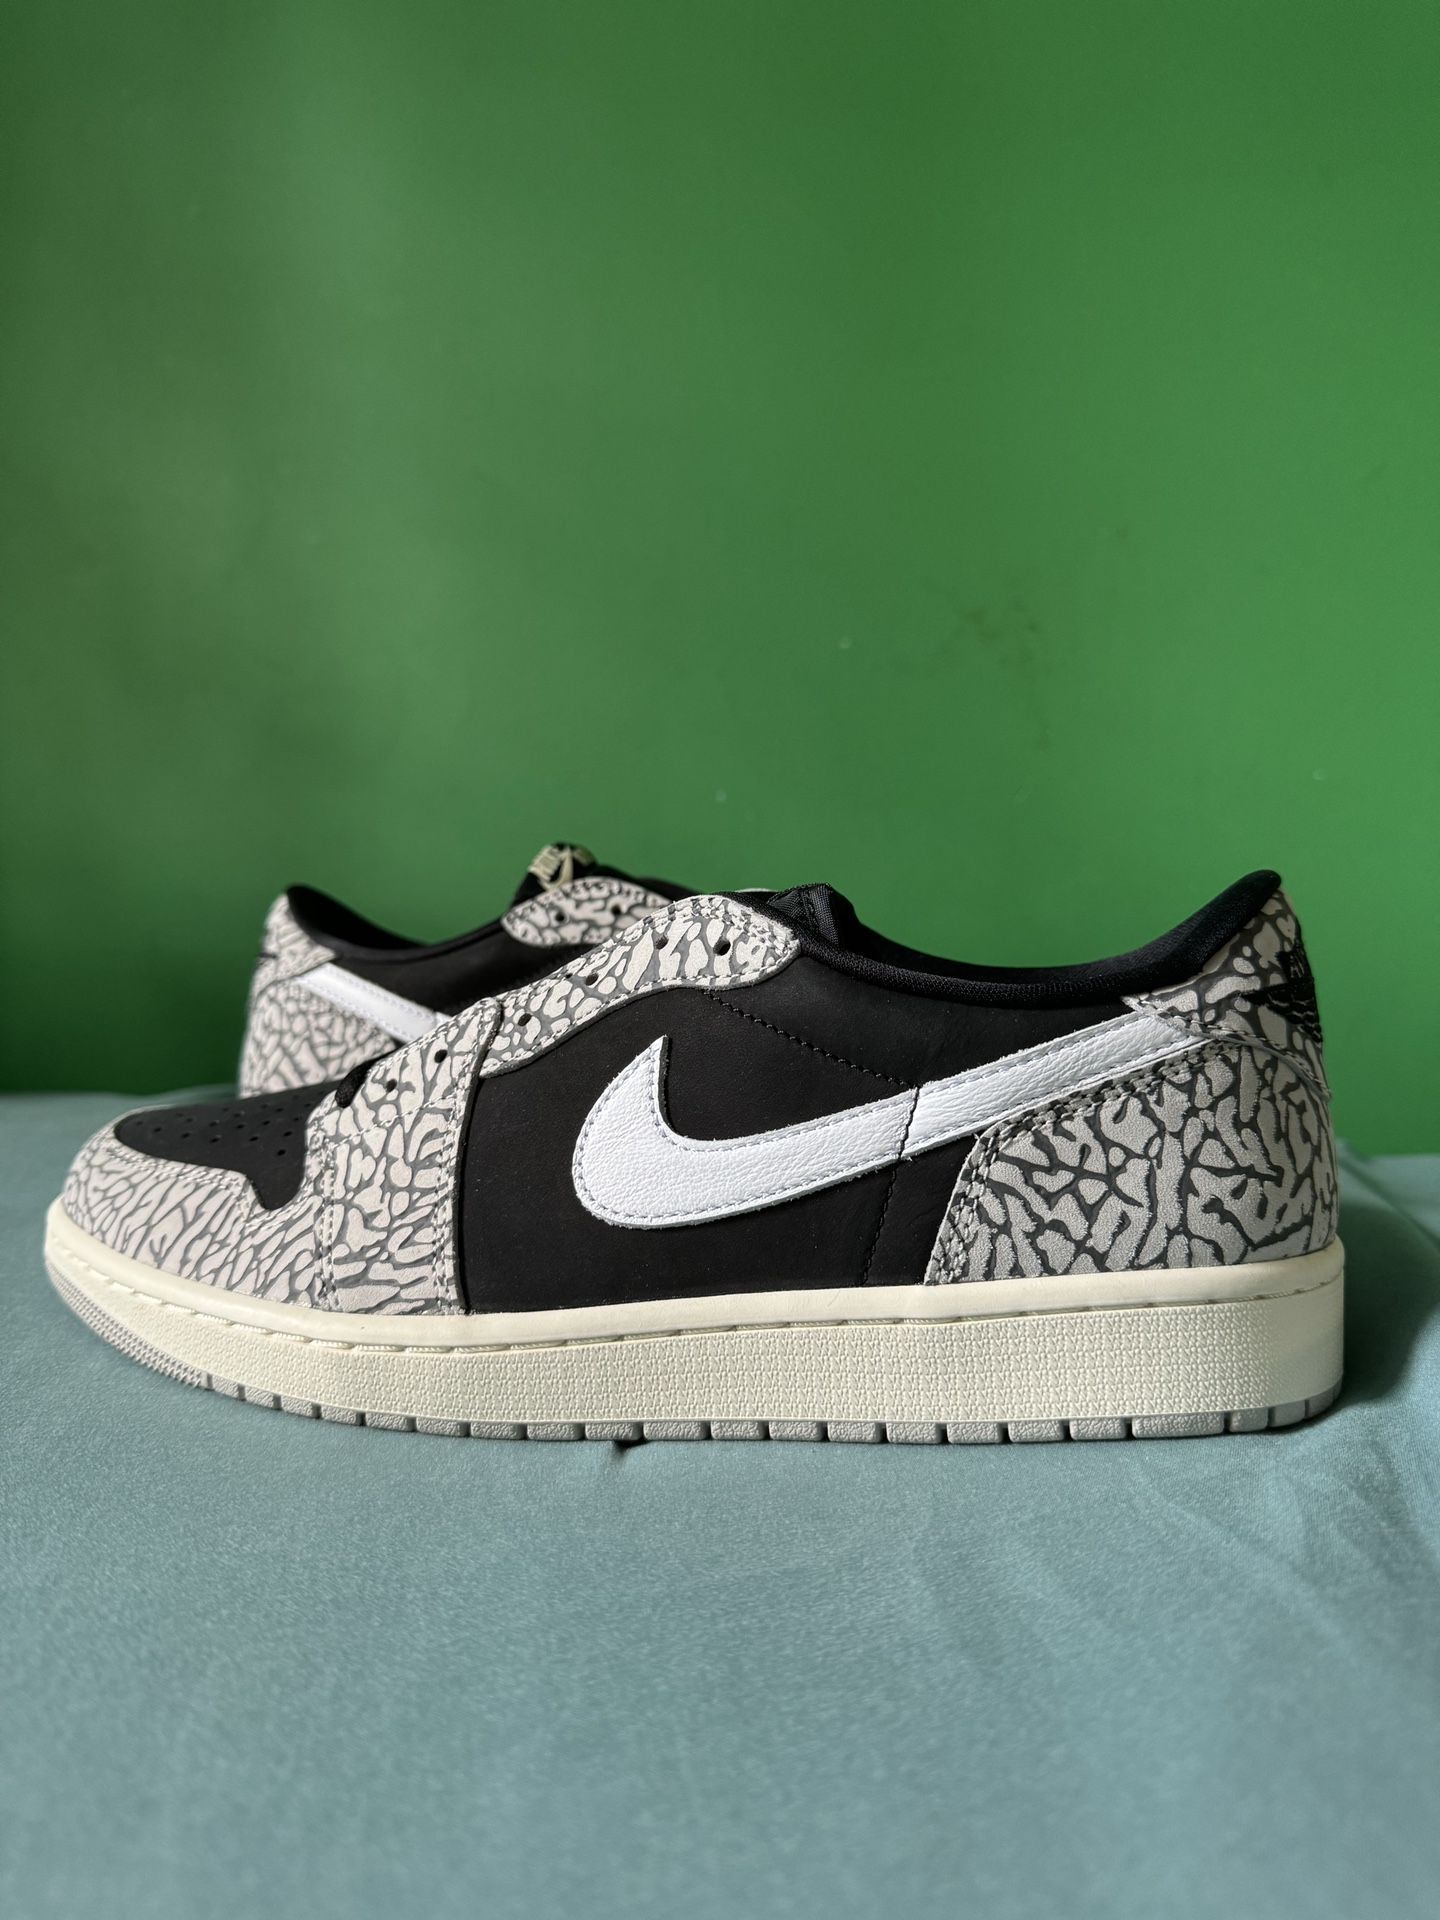 Nike Air Jordan 1 Low OG Black Cement Size 12